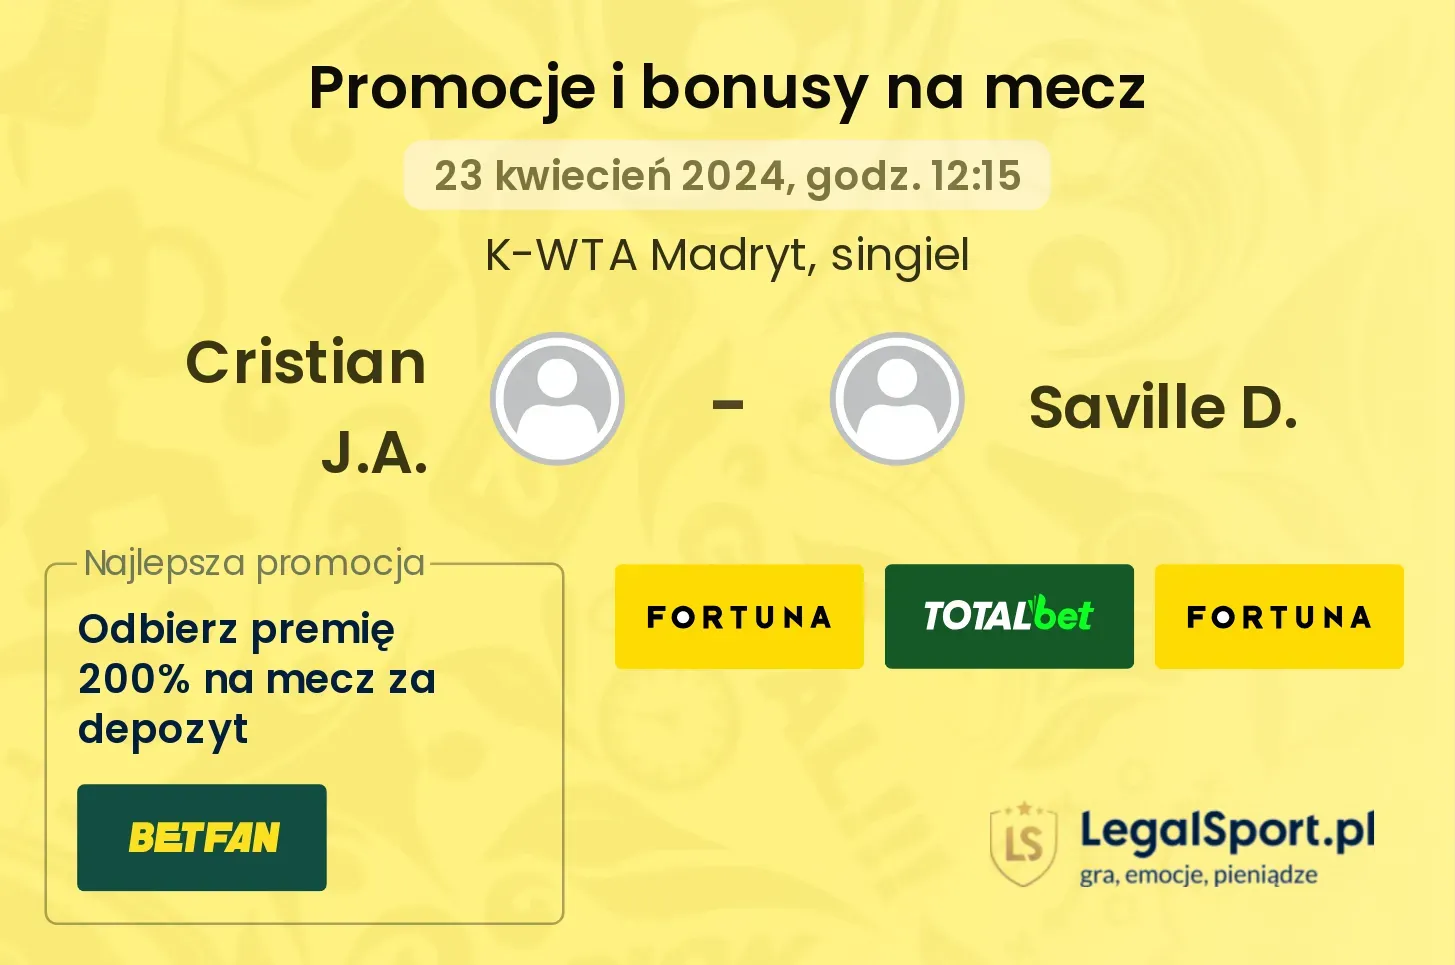 Cristian J.A. - Saville D. promocje bonusy na mecz